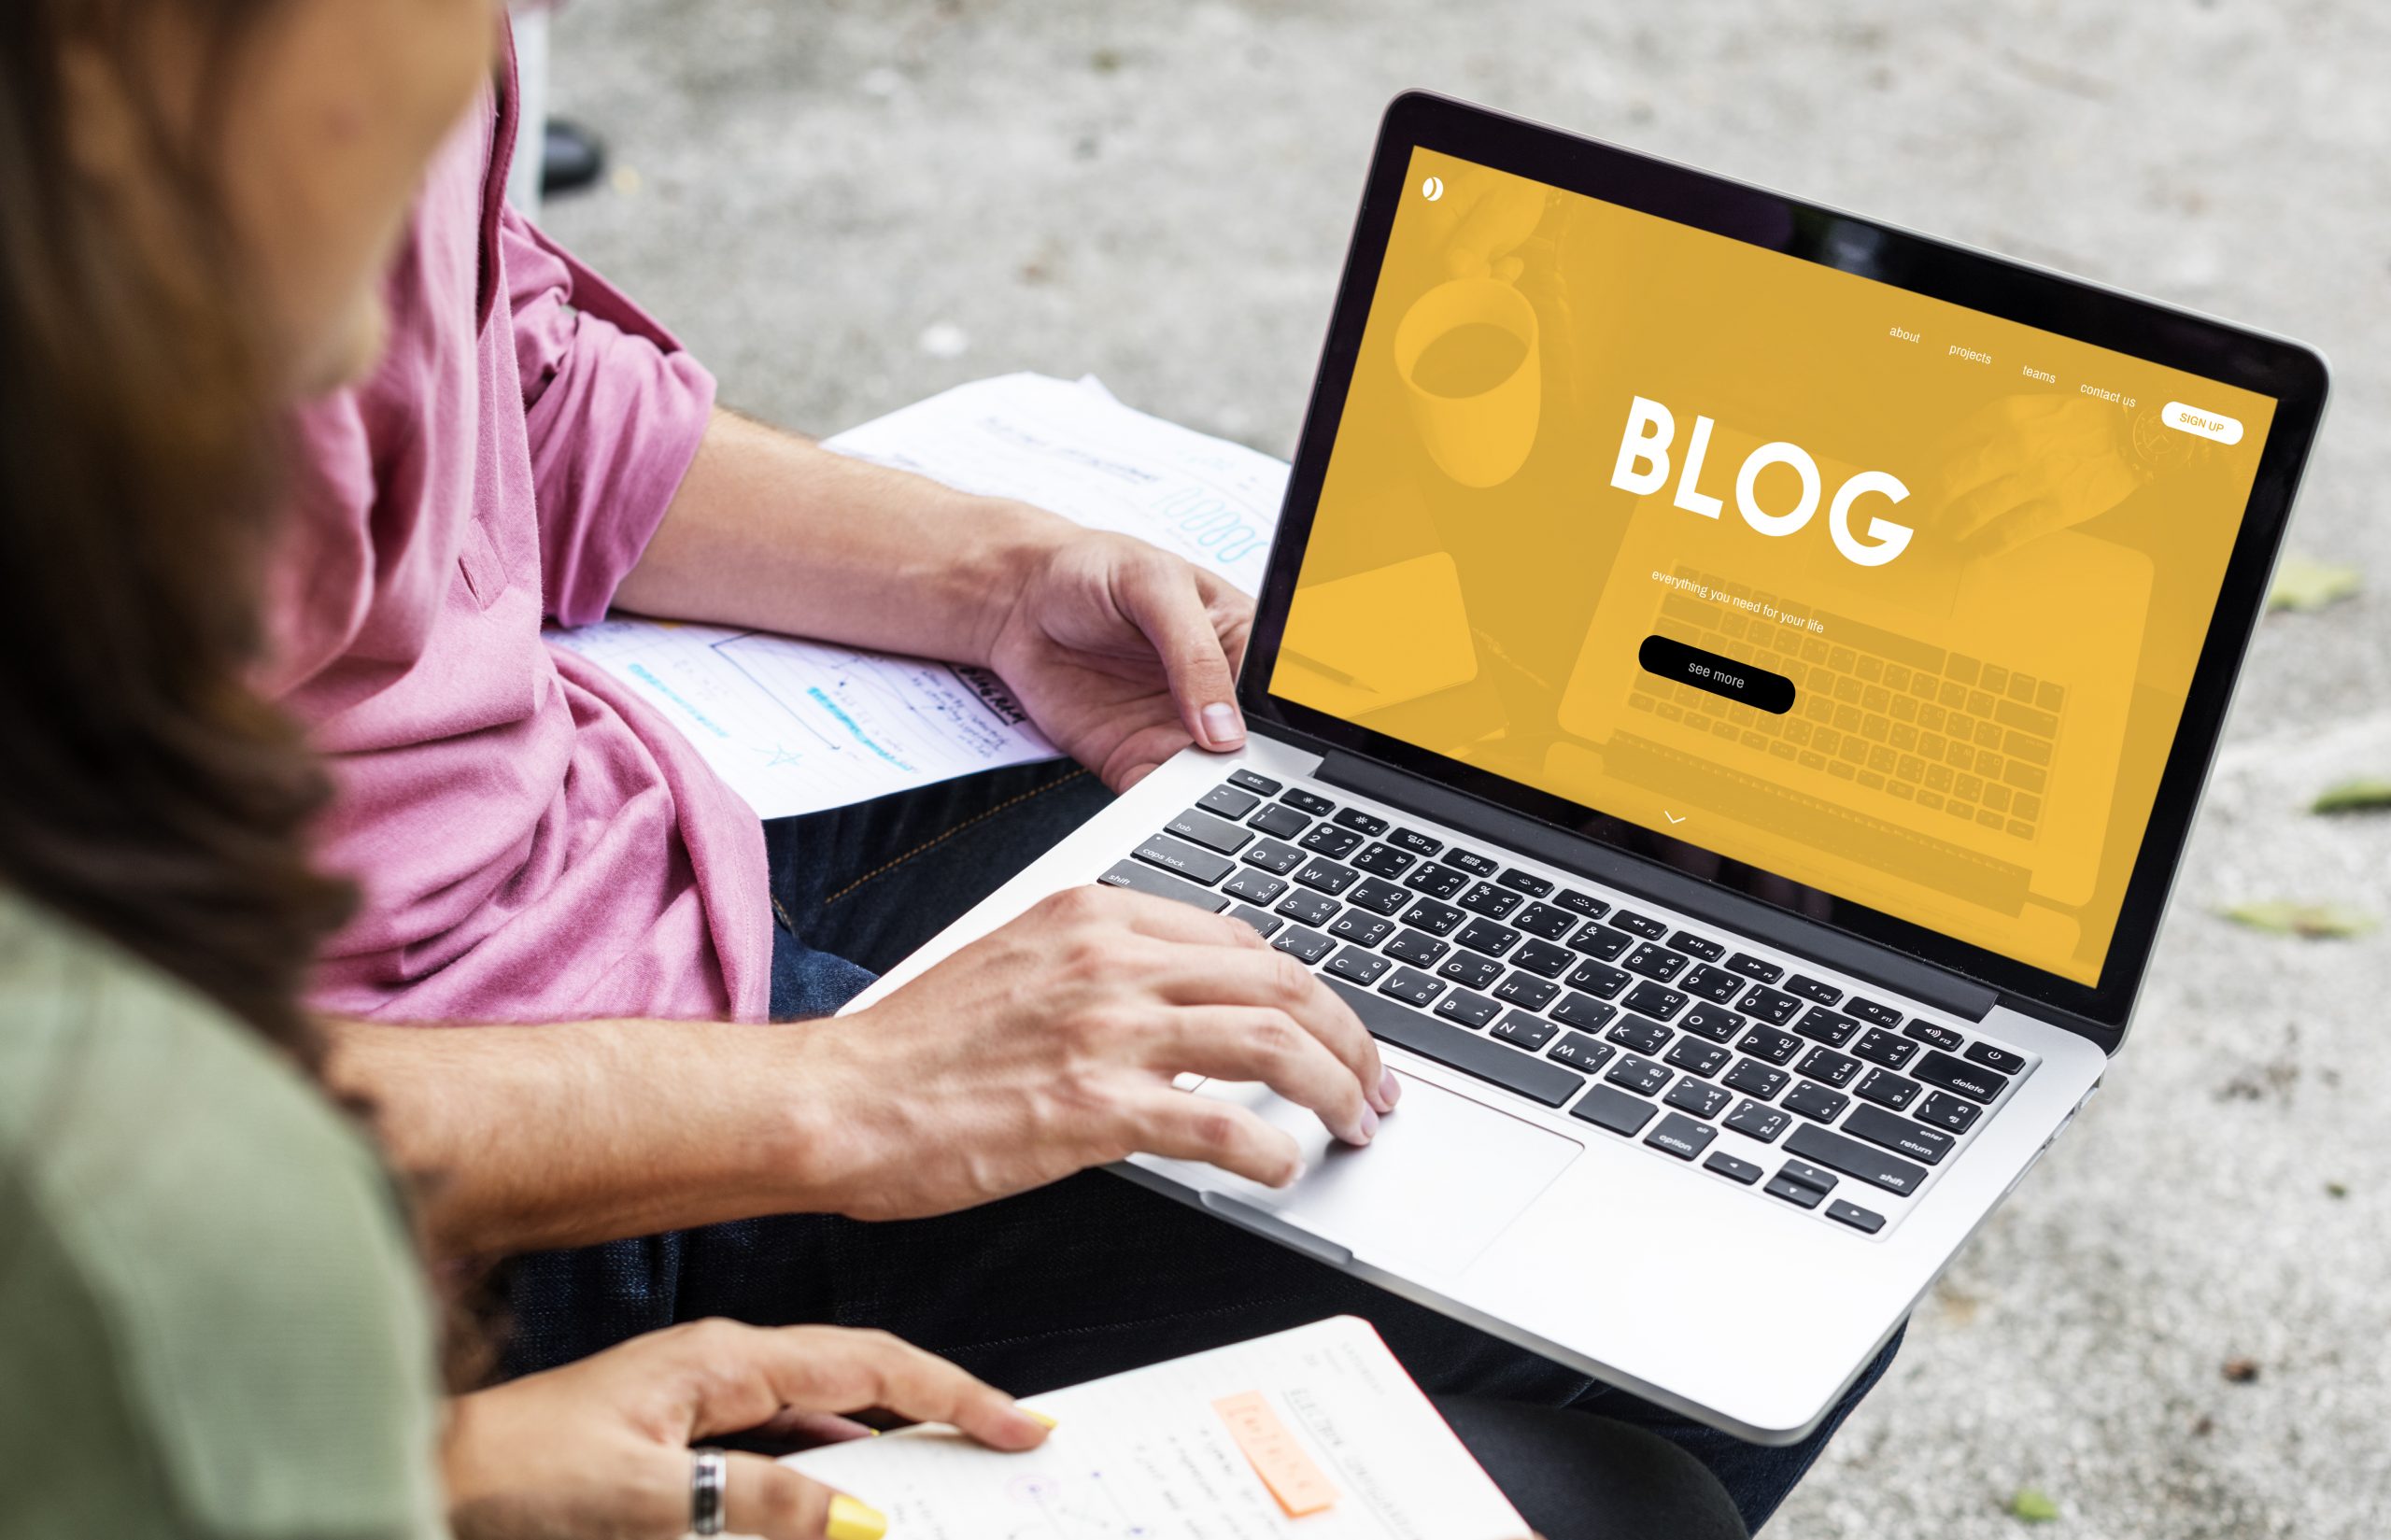 Benefits Of Blogging